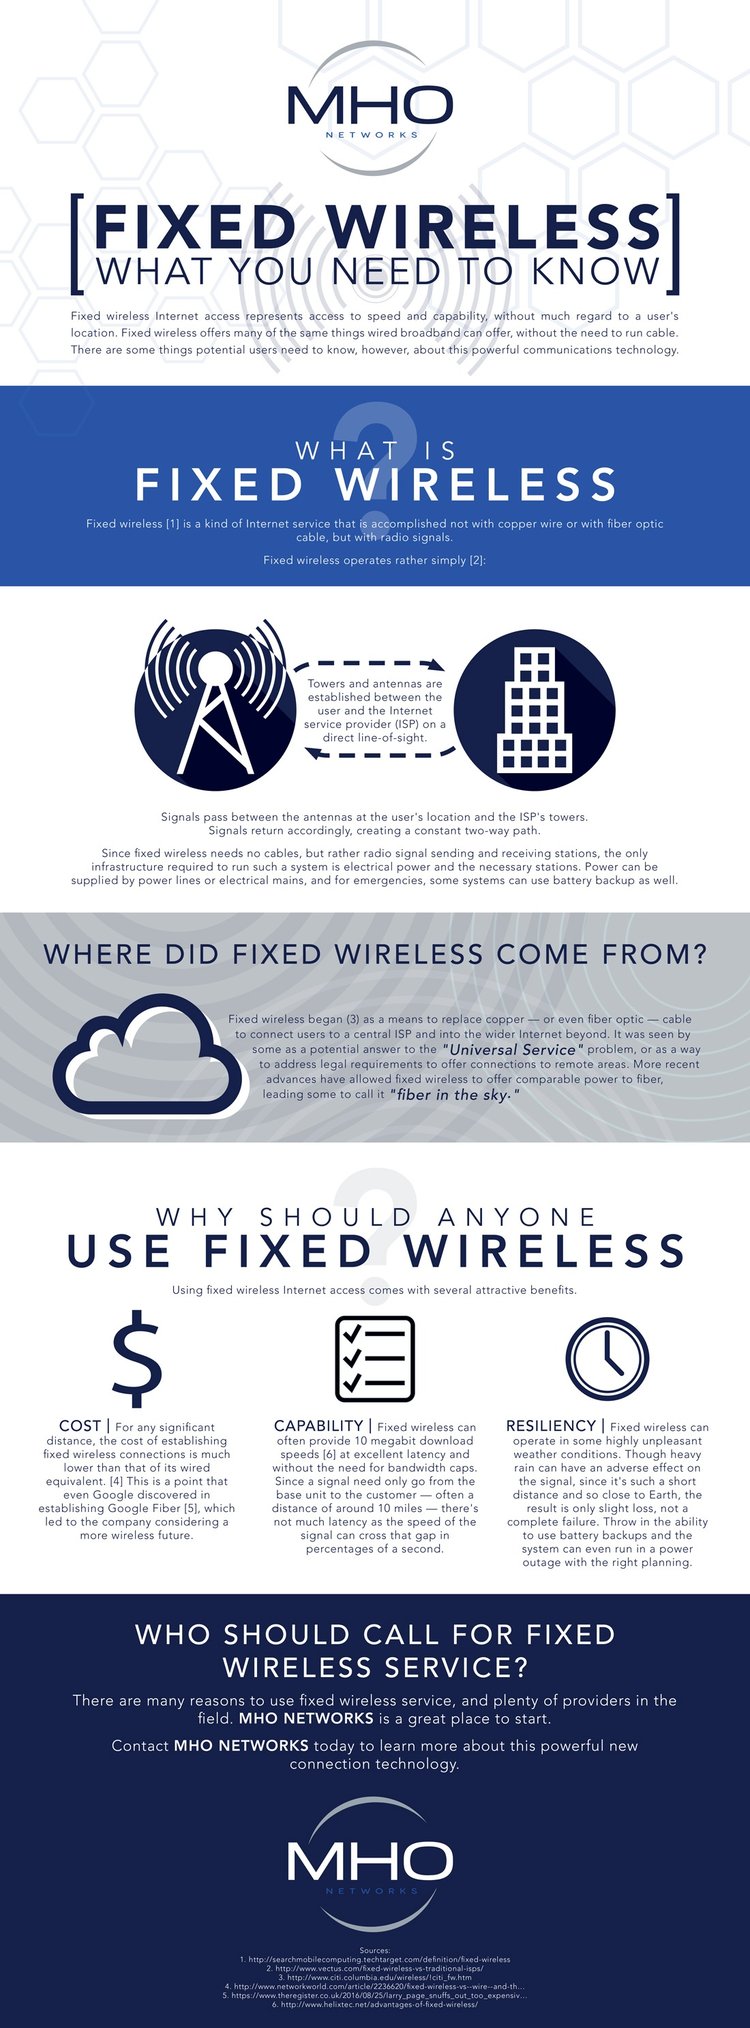 fixed wireless broadband access